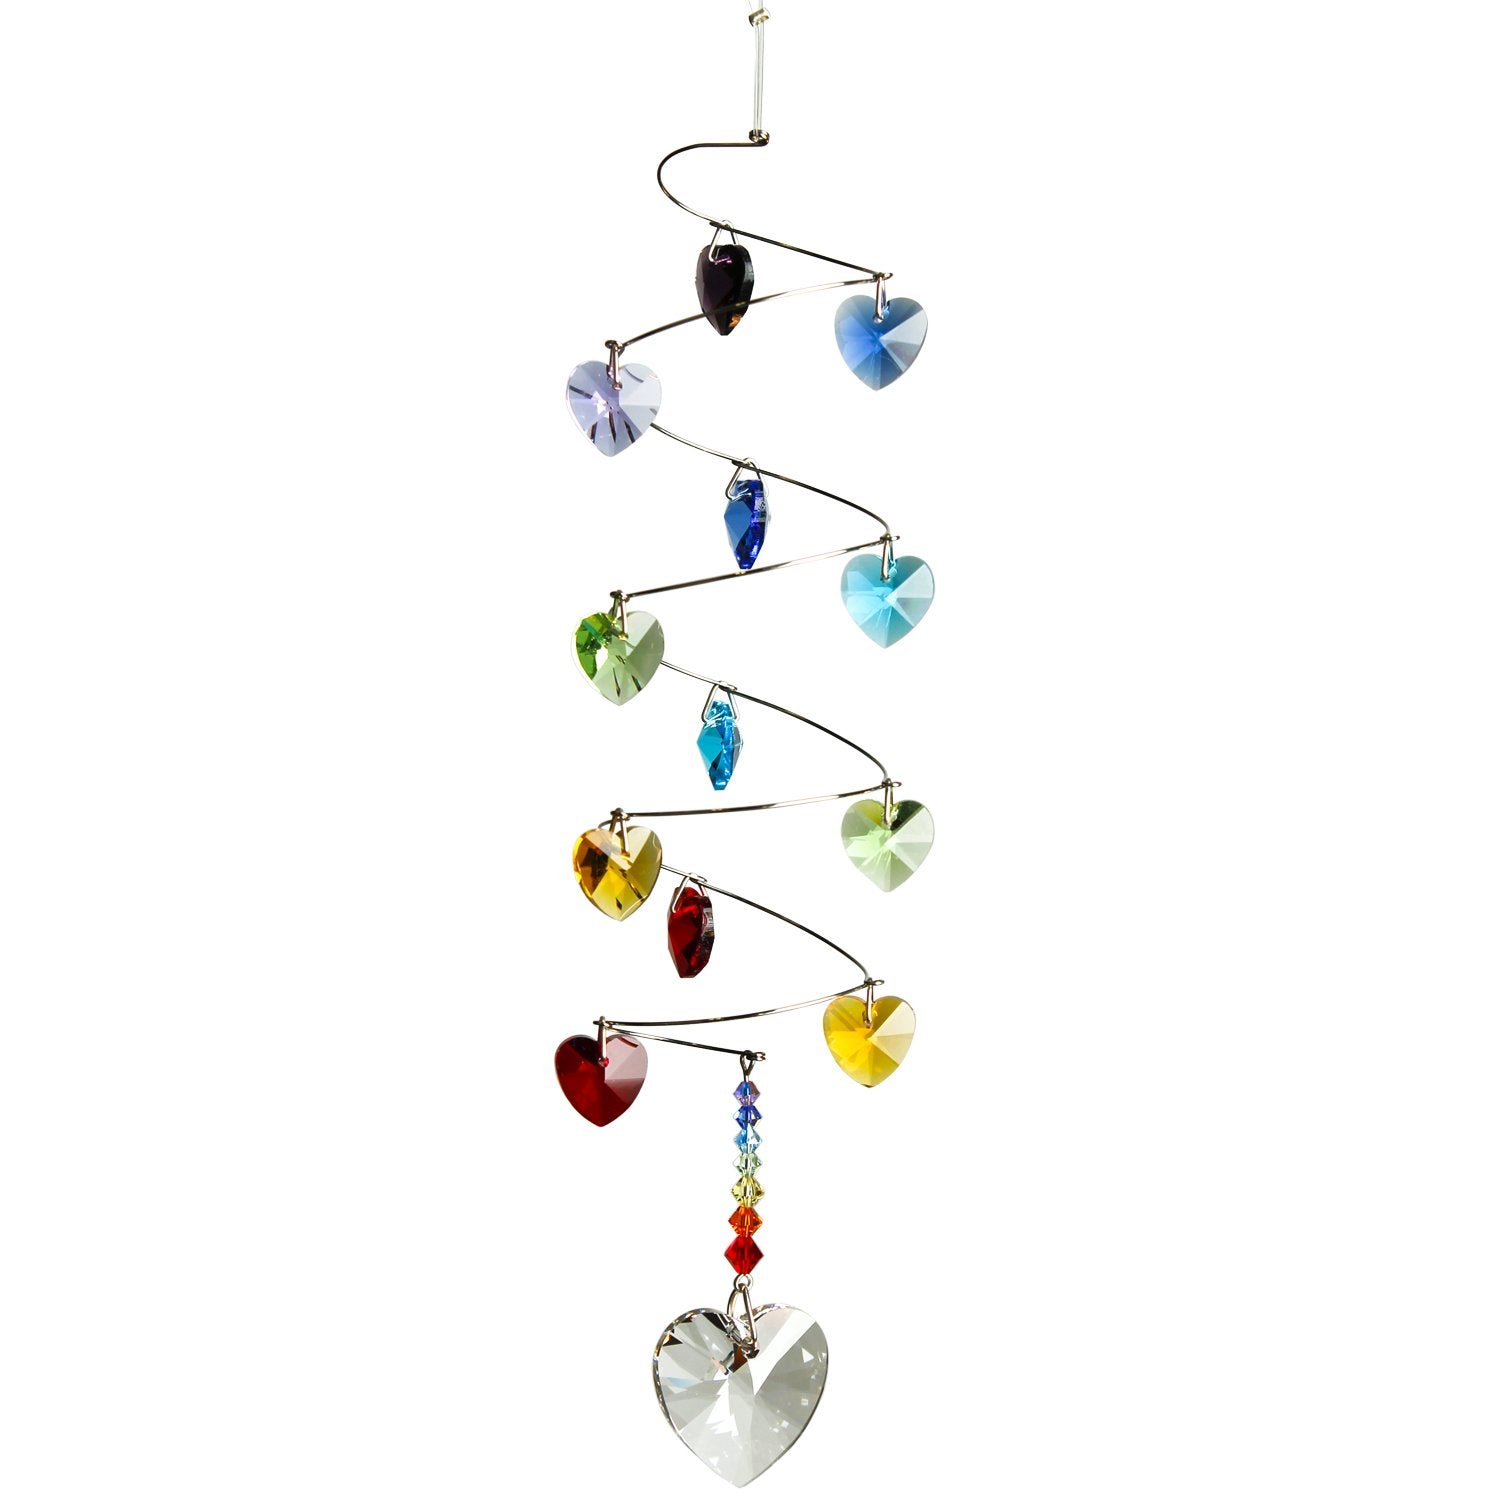 Crystal Spiral Cascade Suncatcher - Rainbow Hearts alternate product image